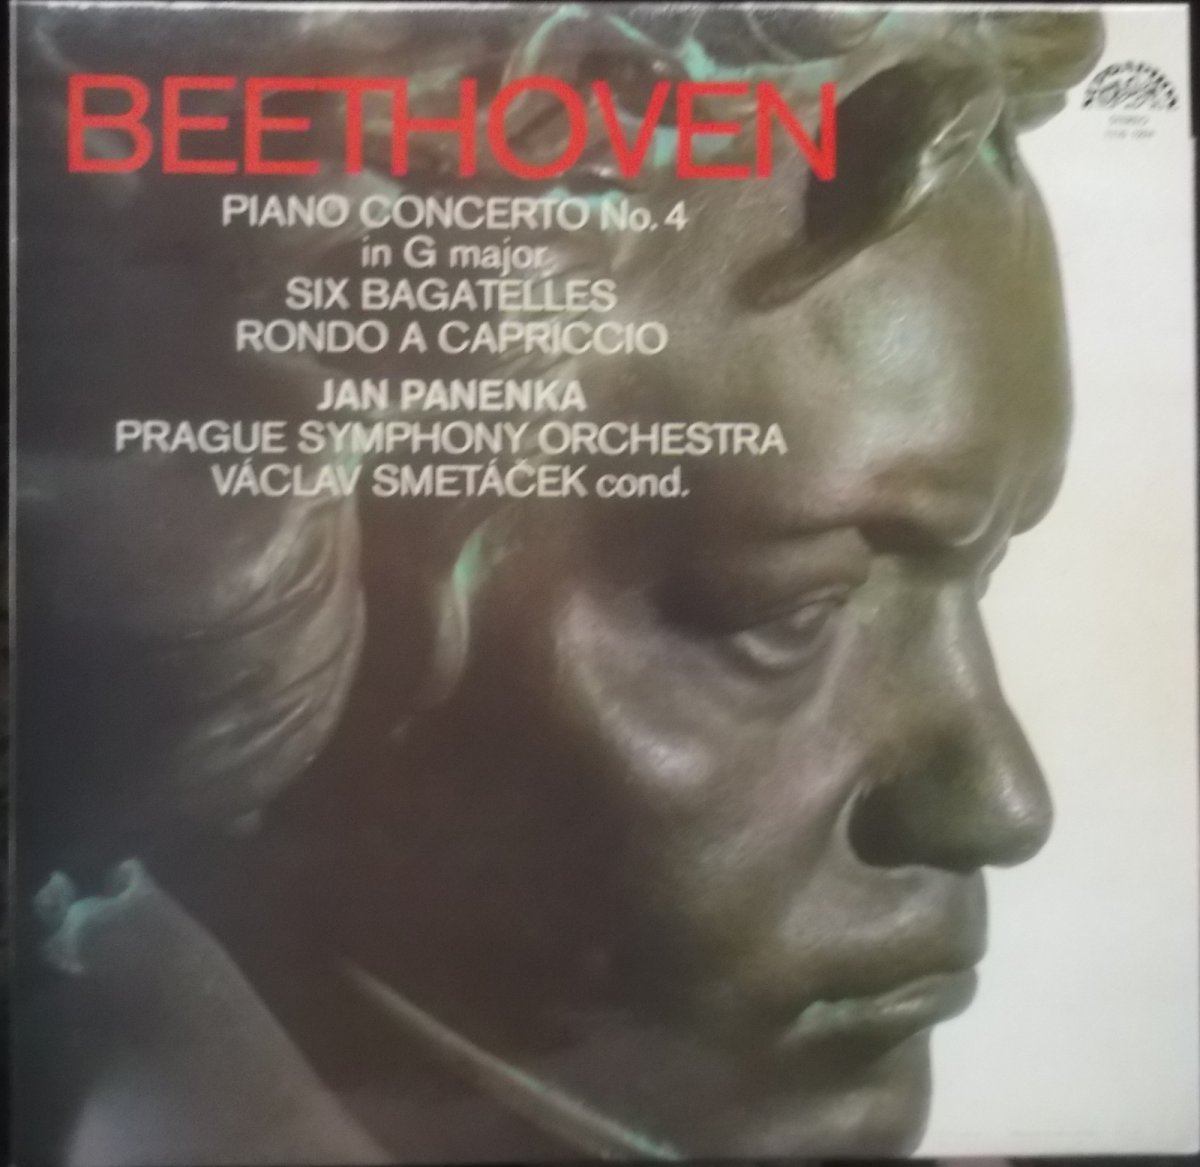 Ludwig van Beethoven - Koncert fortepianowy nr.4, 6 bagateli na fortepian, Rondo-Capriccio 